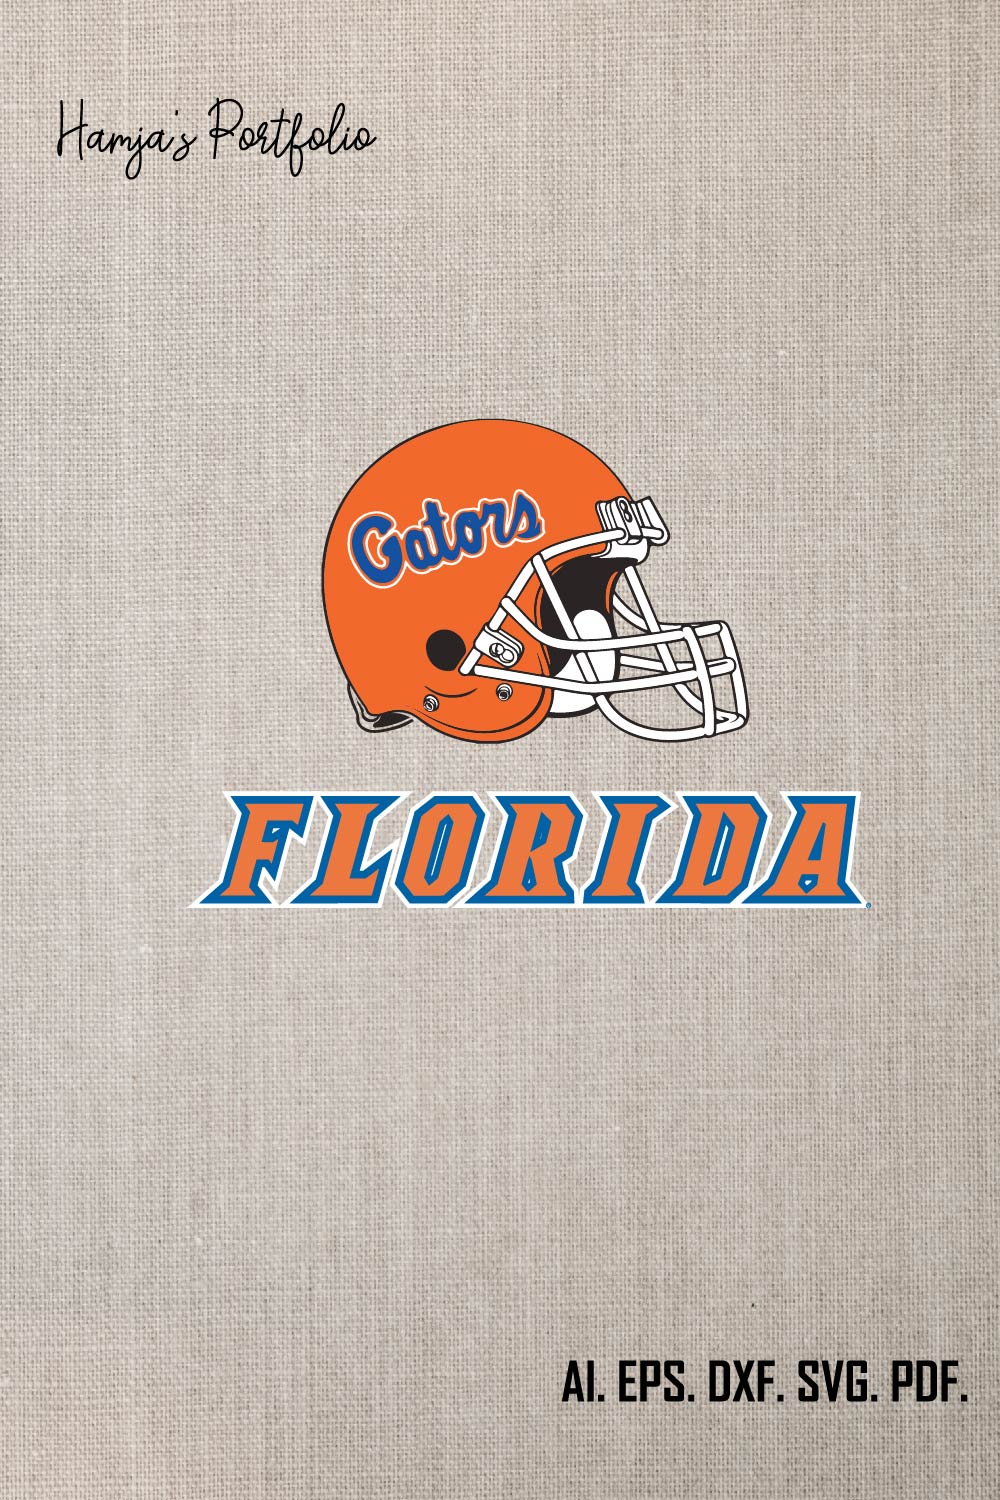 Florida Gators SVG Set ll sport vector logo set pinterest preview image.